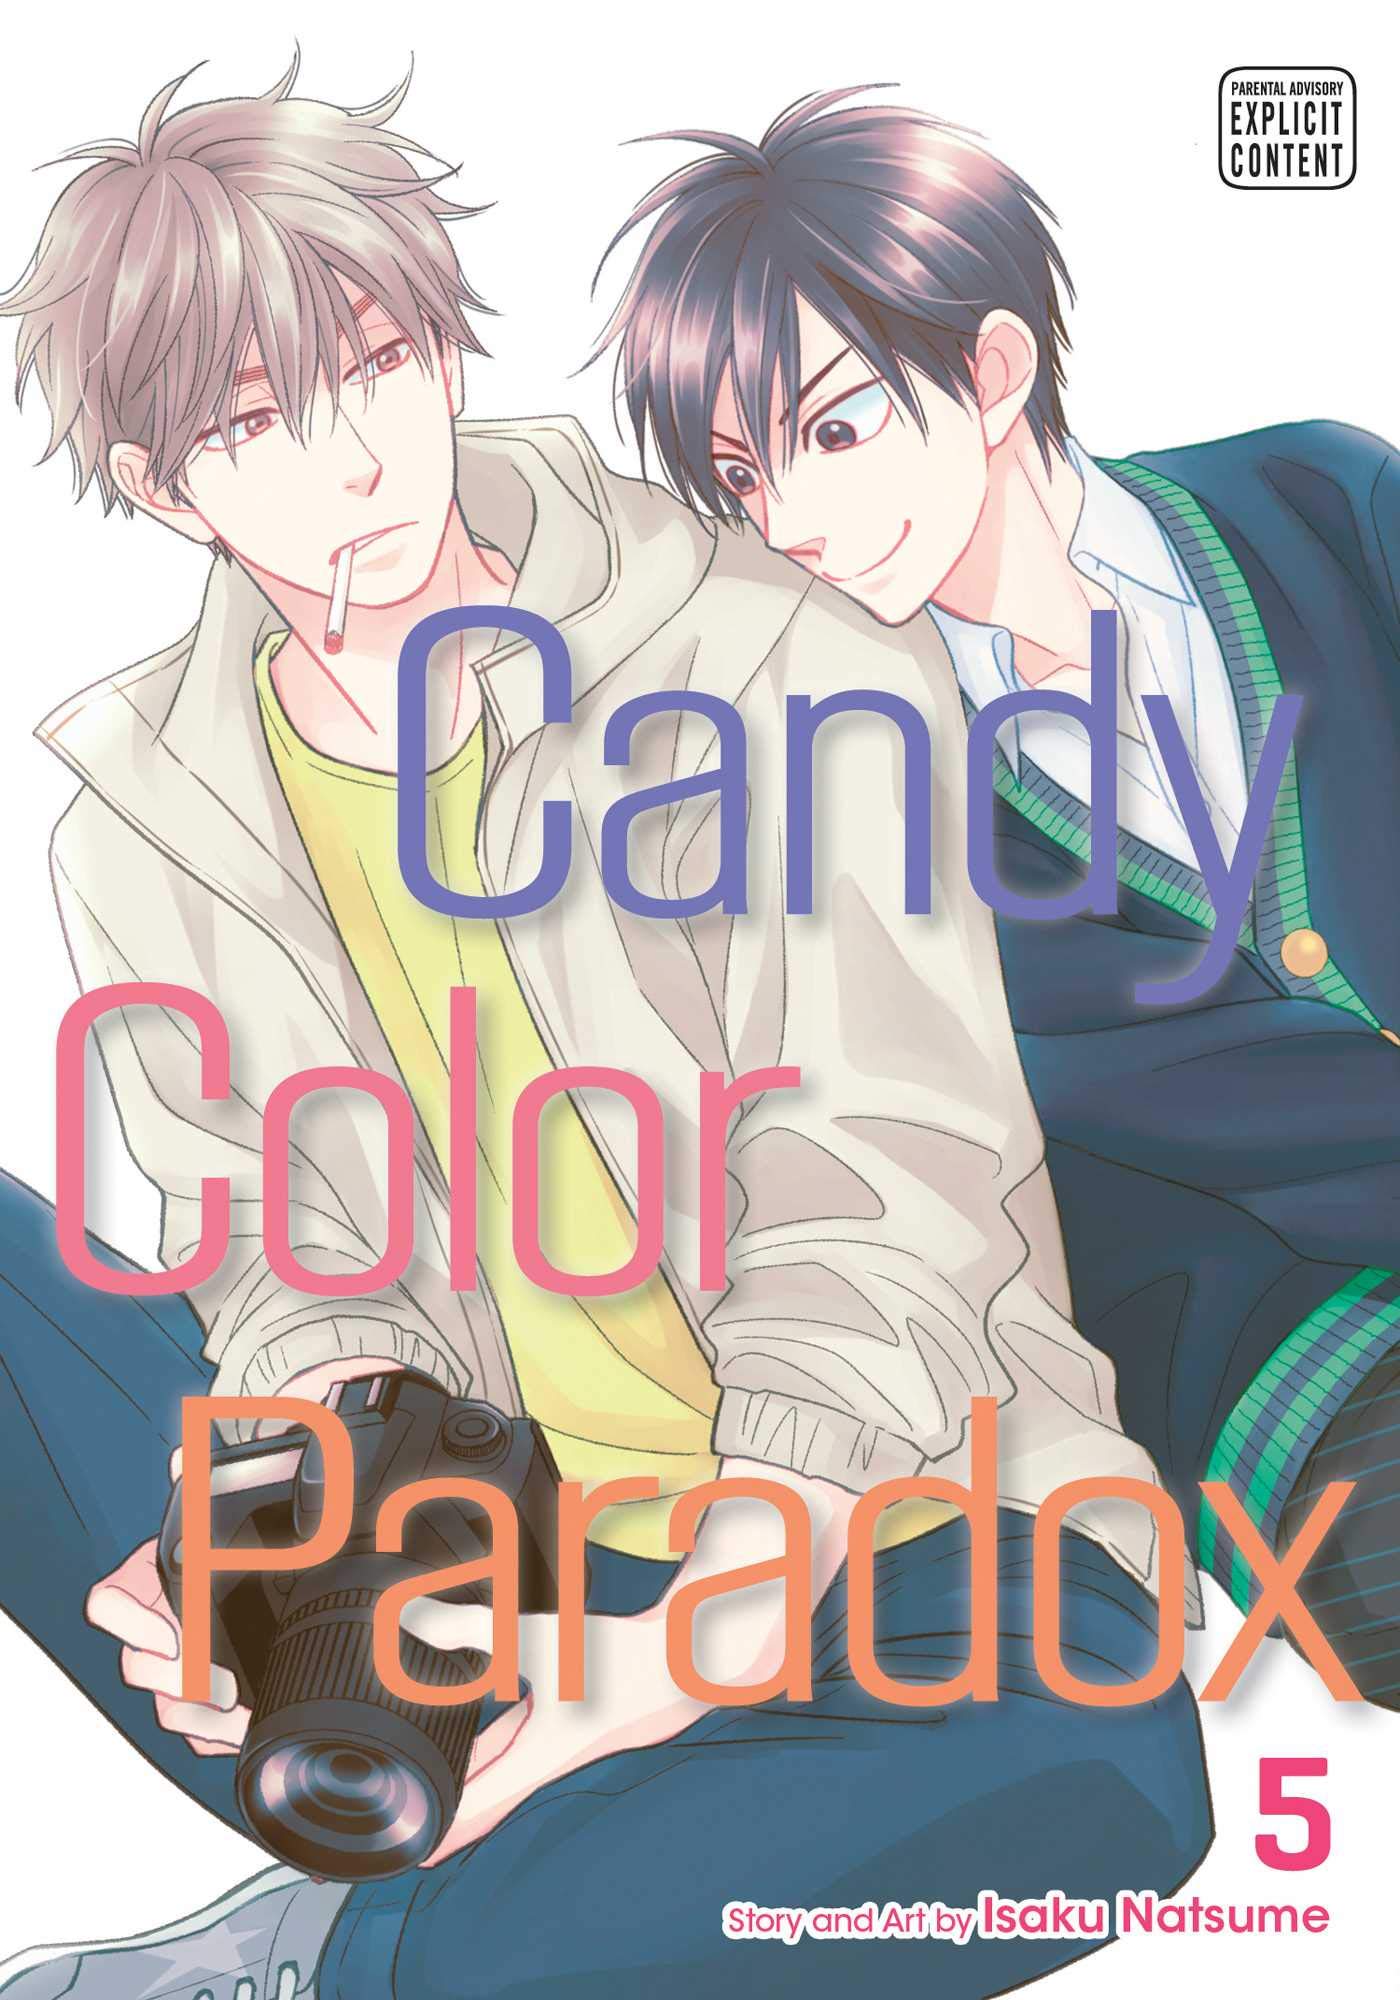 Candy Color Paradox - Volume 5